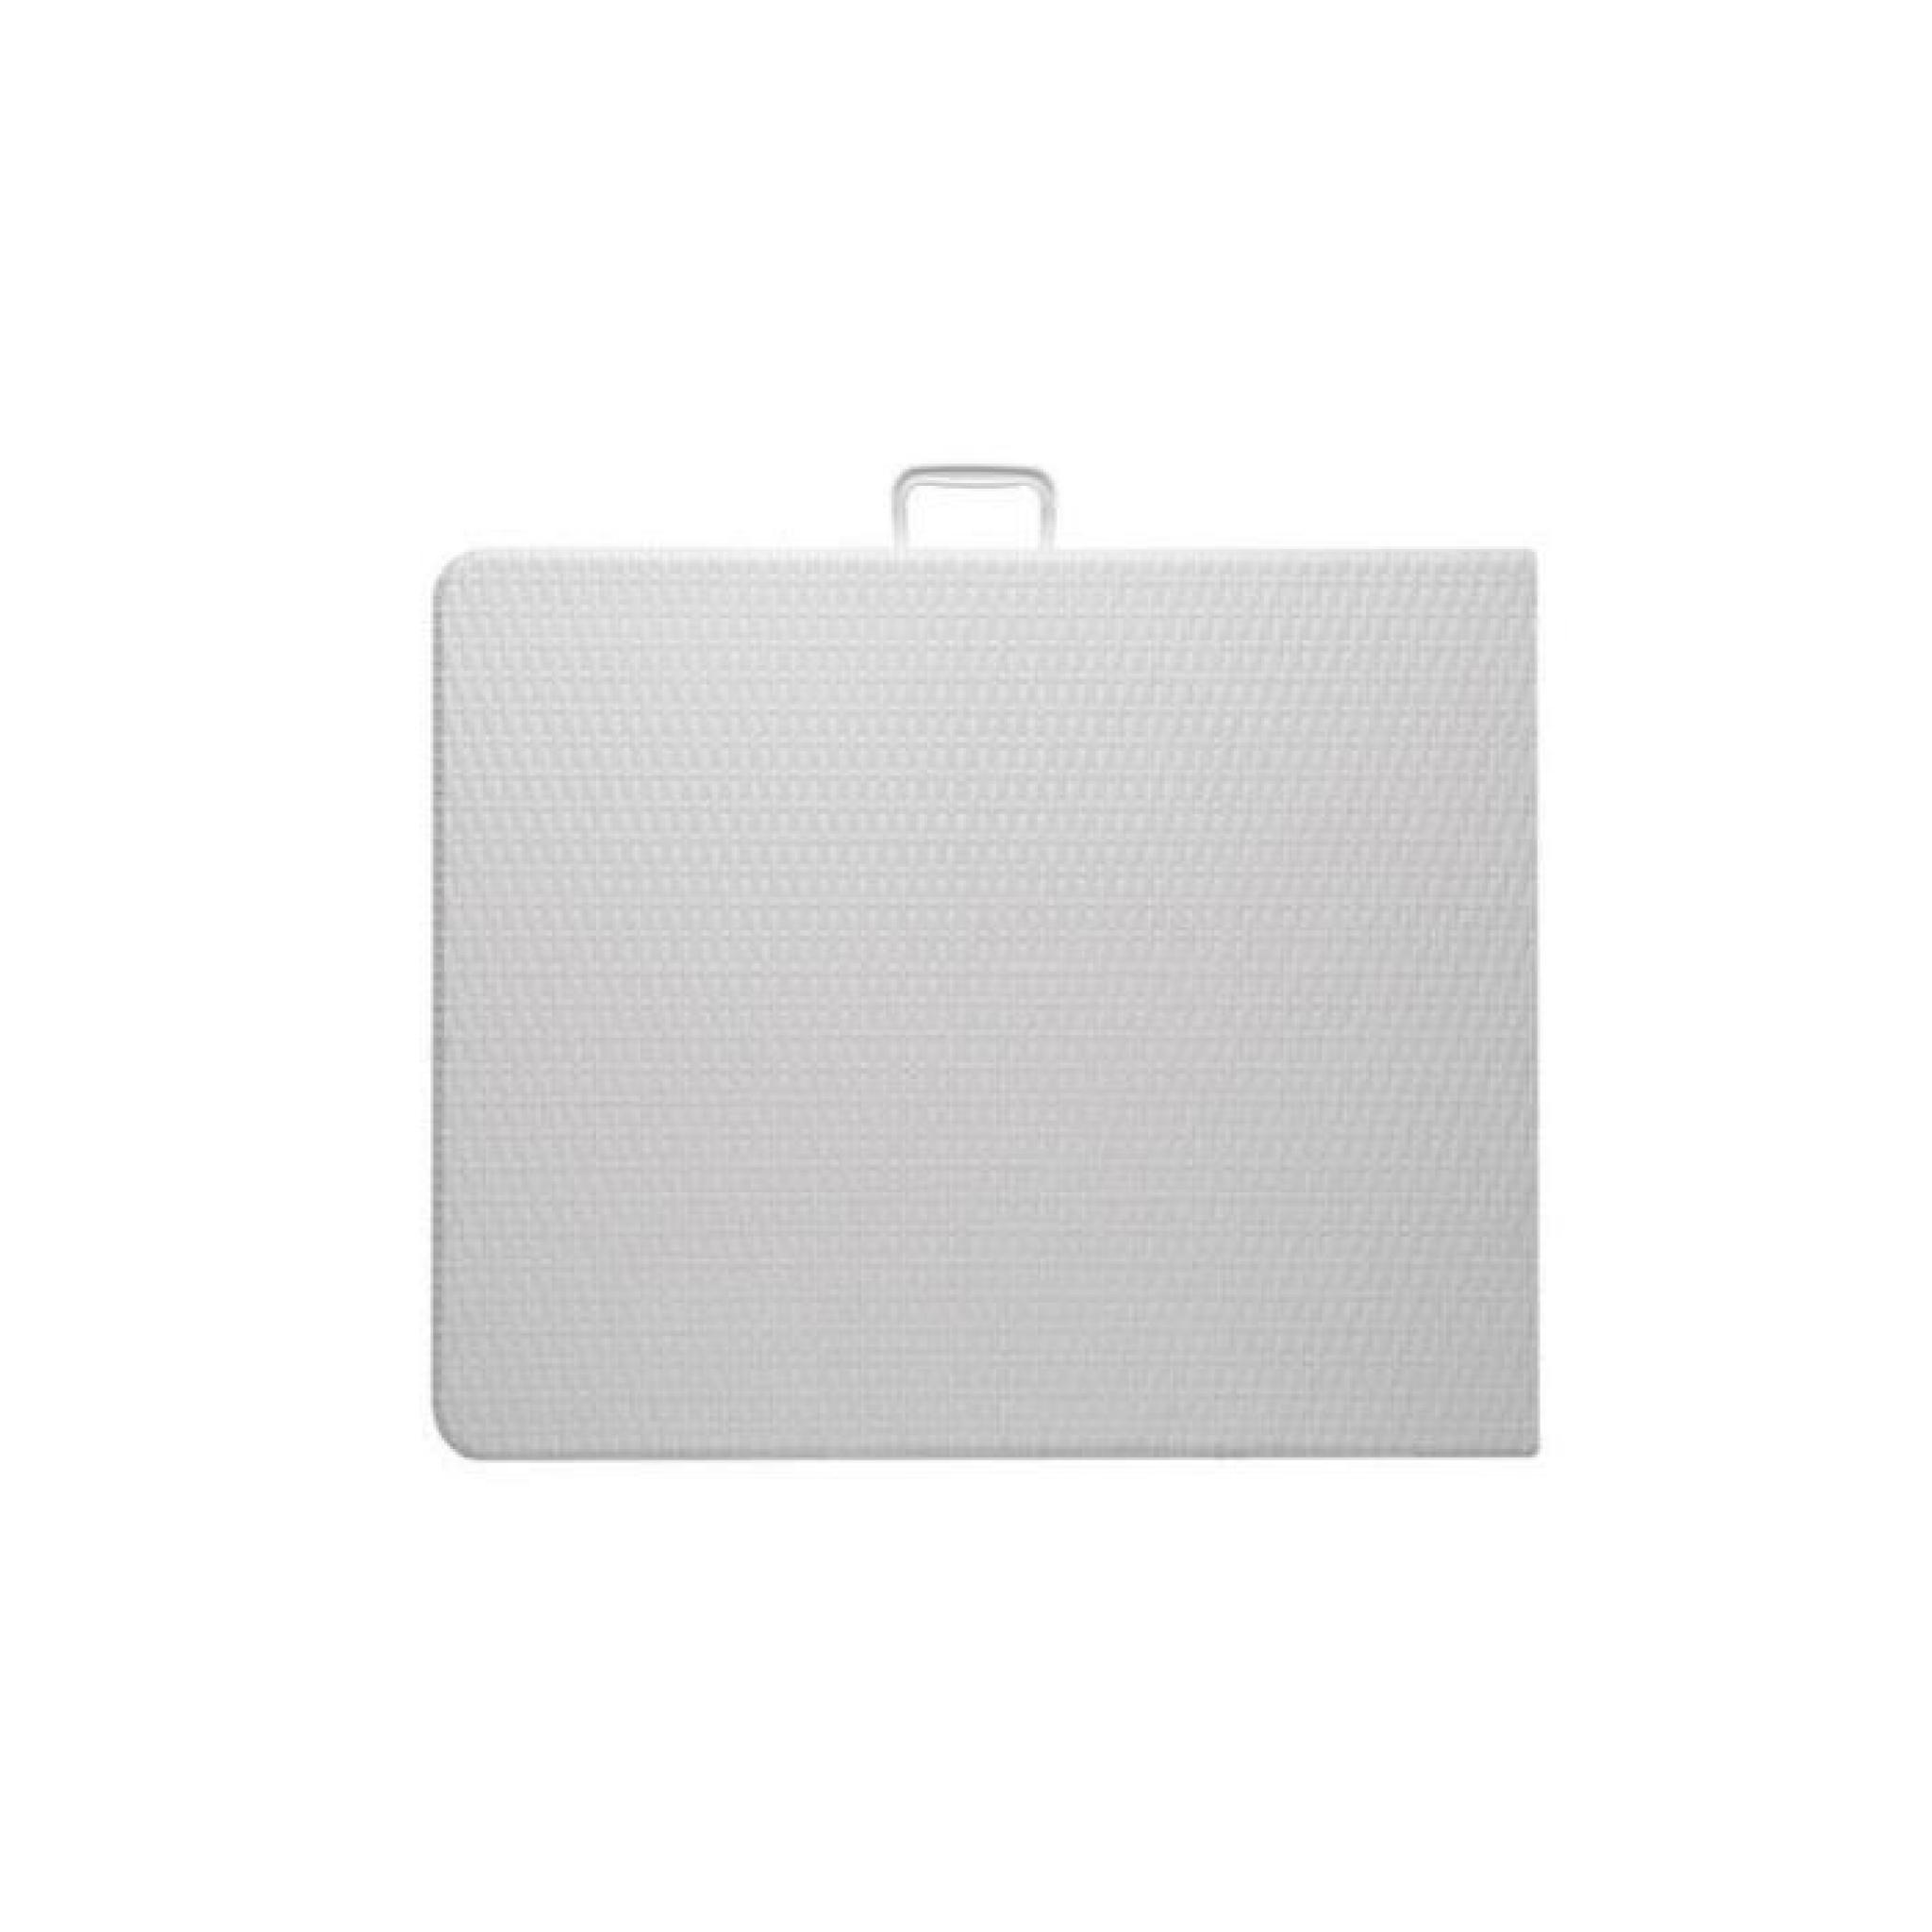 Table pliante - imitation rotin blanc - 180 cm pas cher